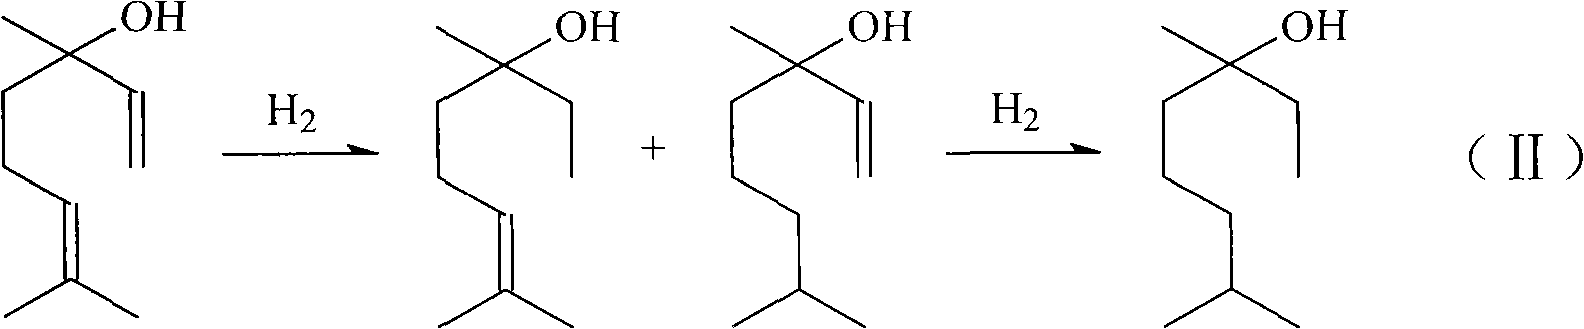 Method for preparing linalool from dehydrolinalool through selective hydrogenation